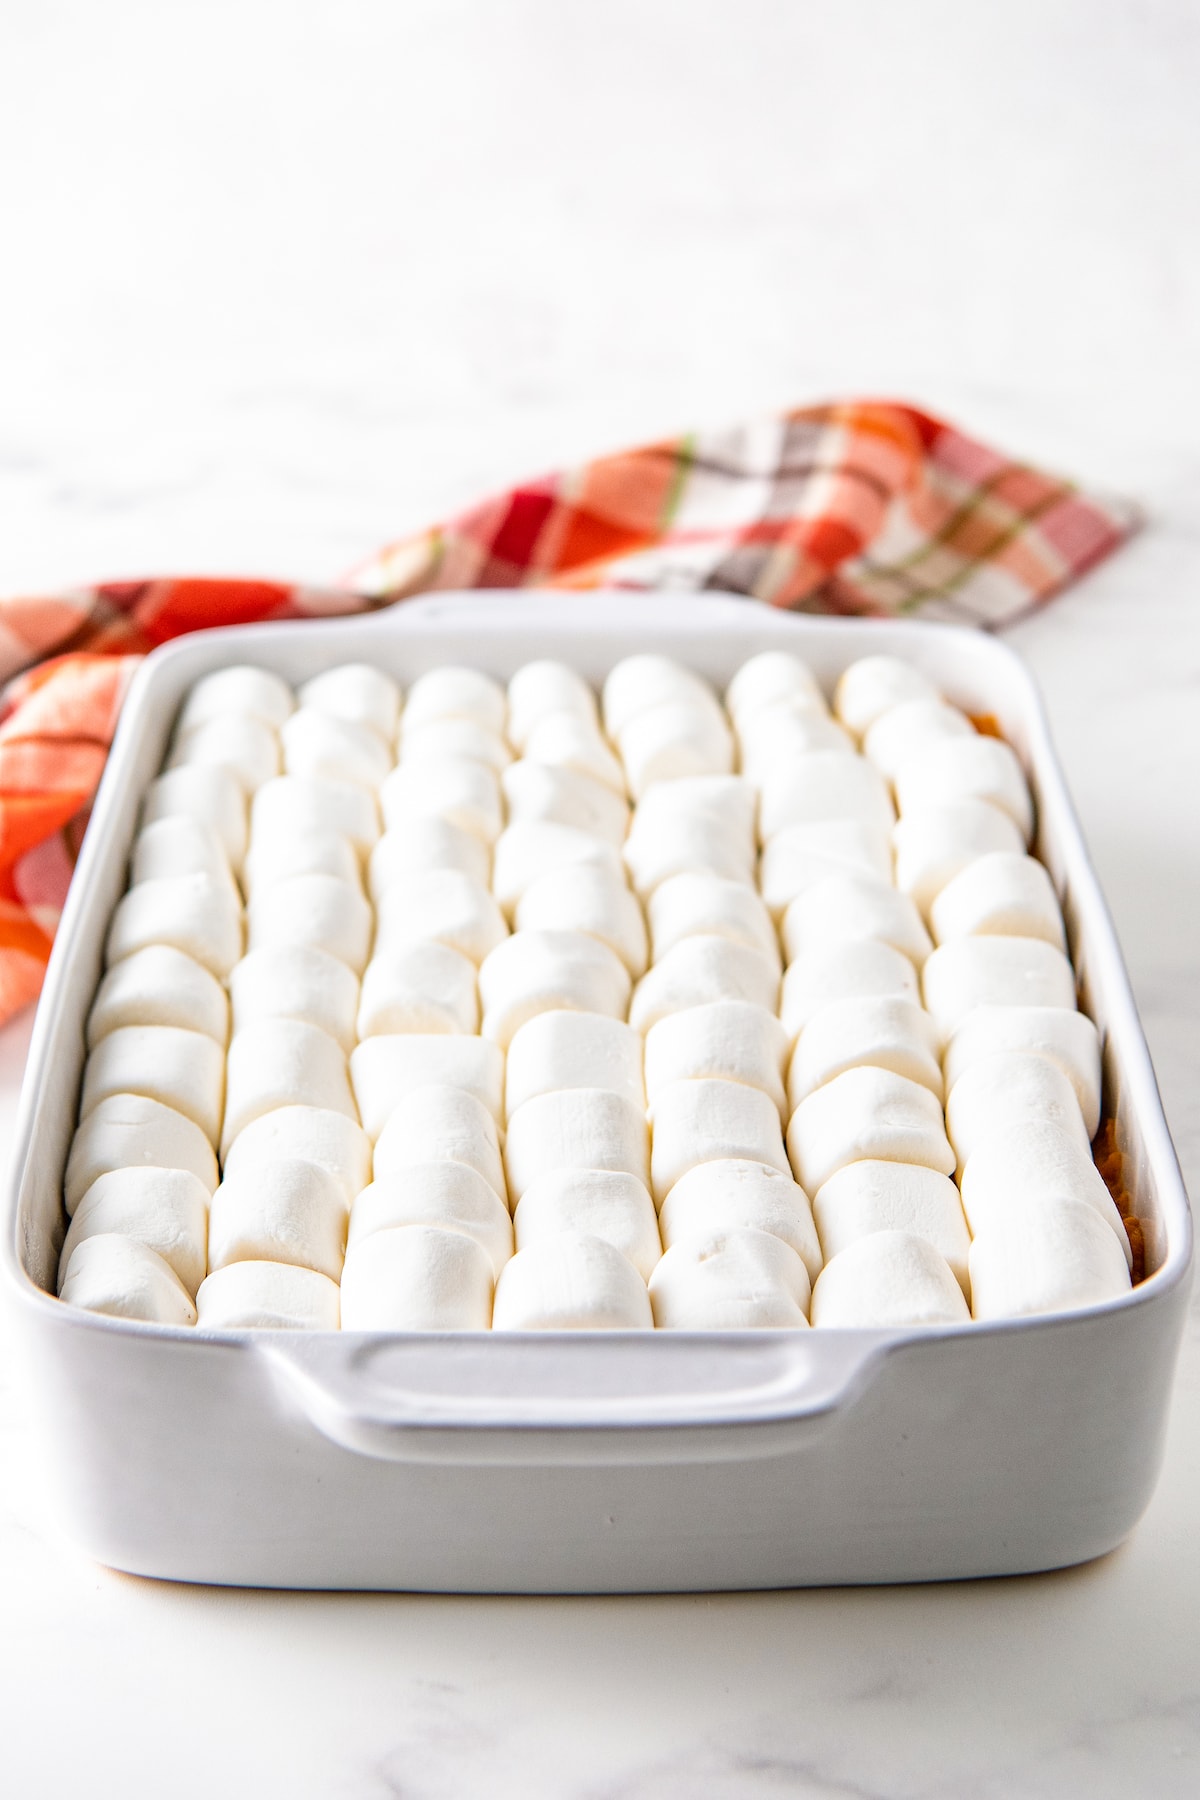 marshmallows laying flat on a caserole dish